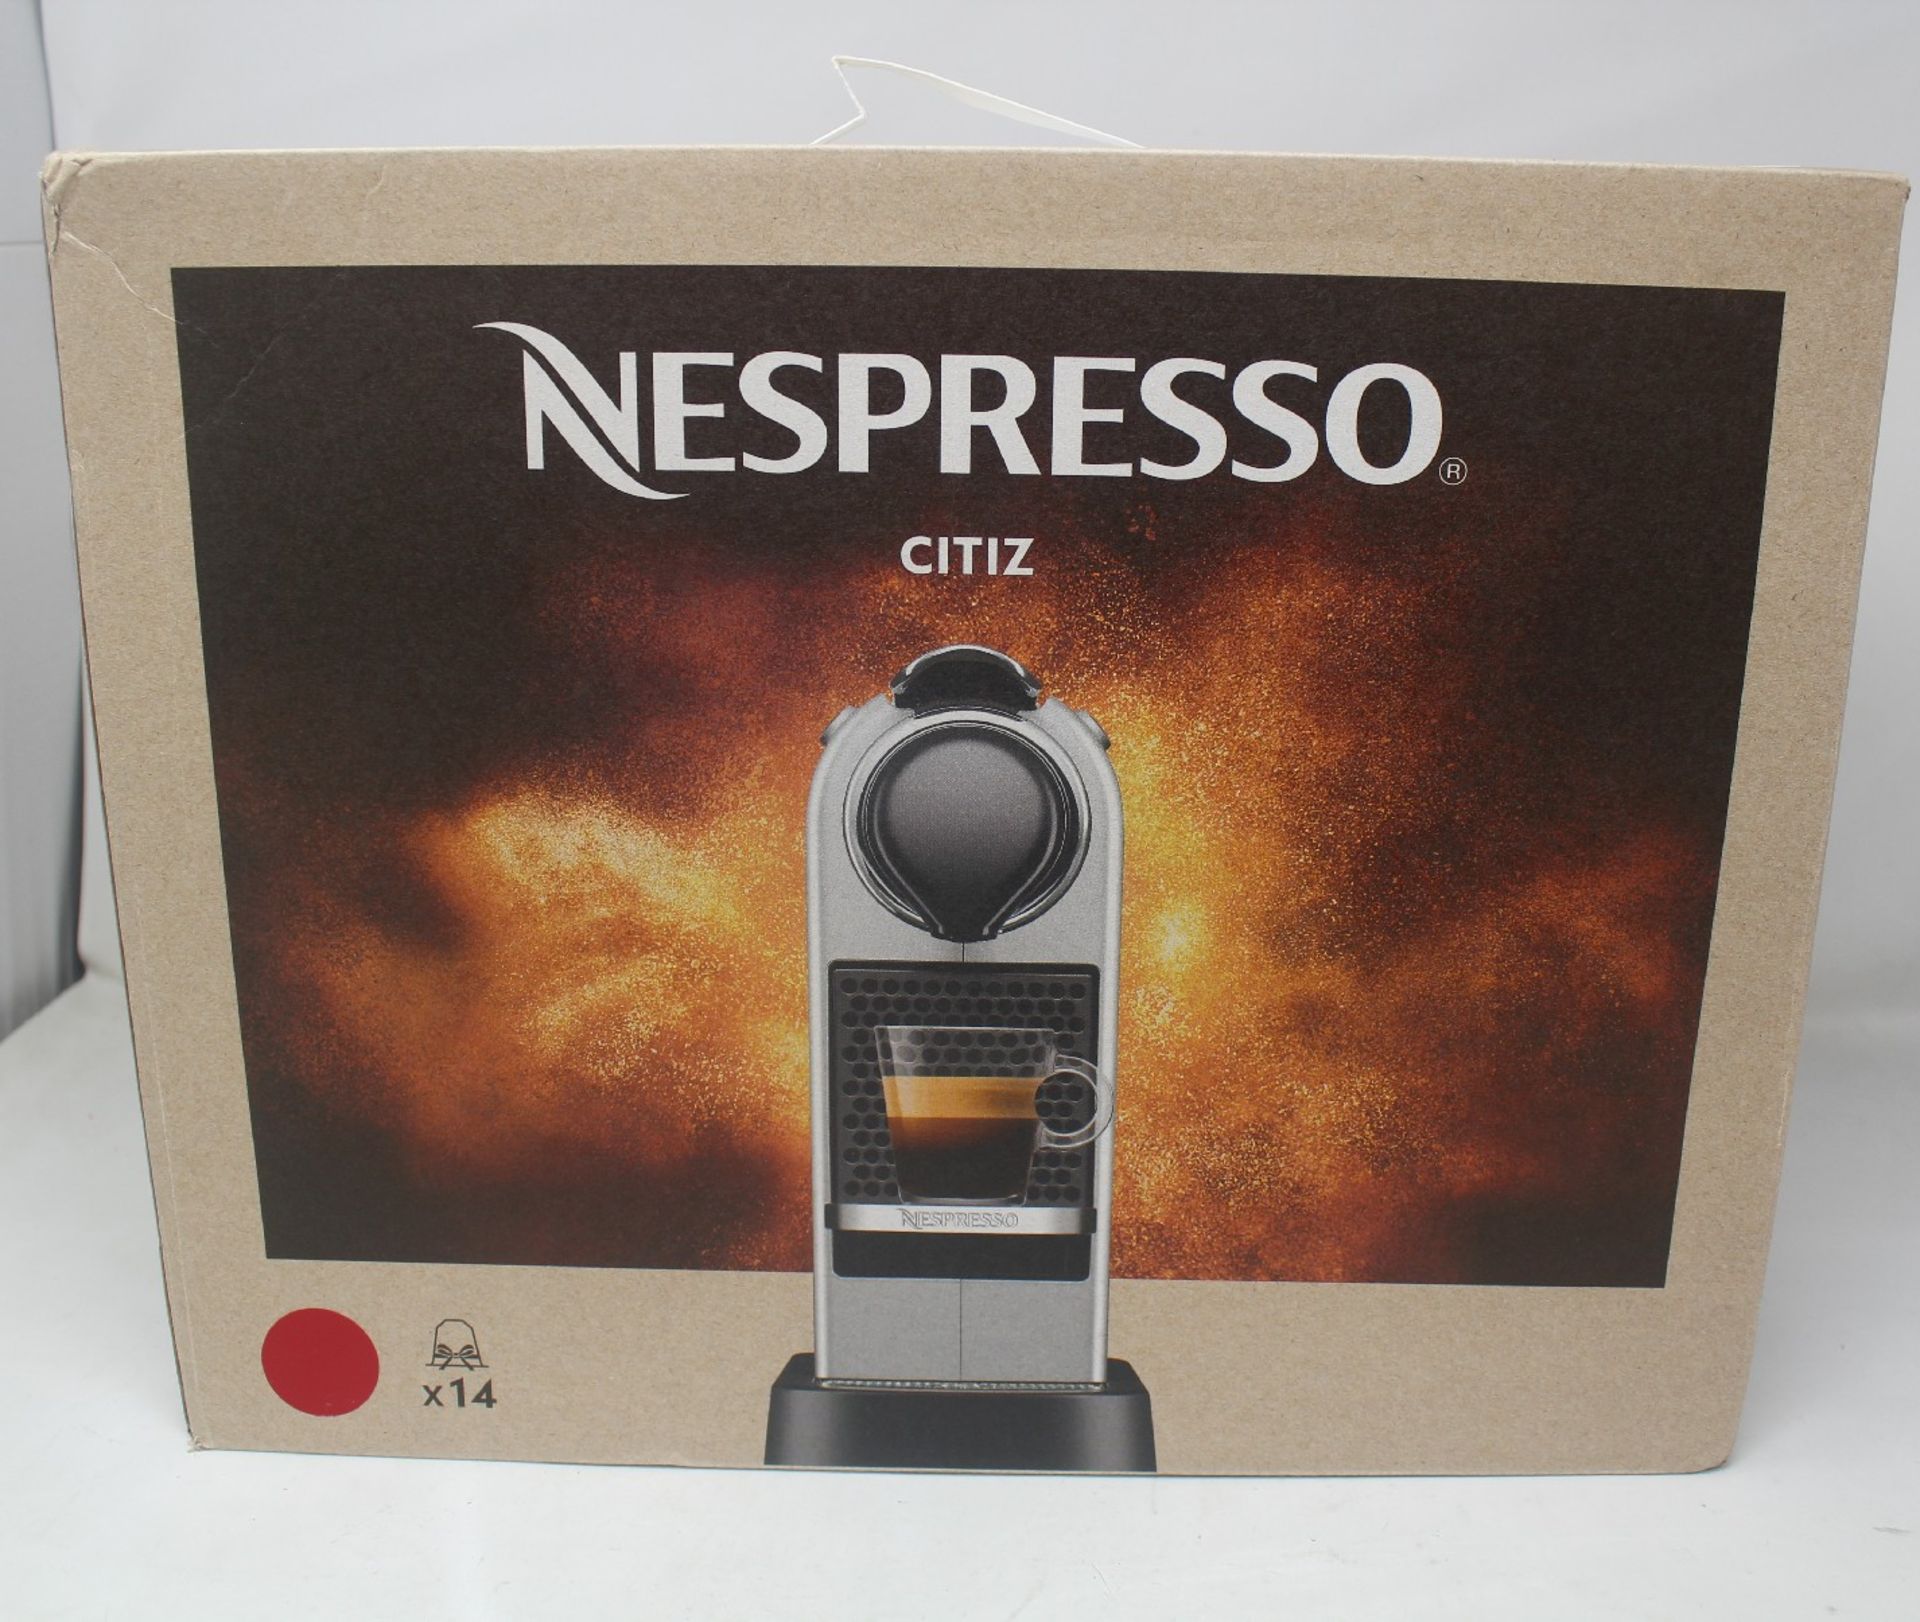 A boxed as new Nespresso Citiz Coffee Machine - Cherry Red.